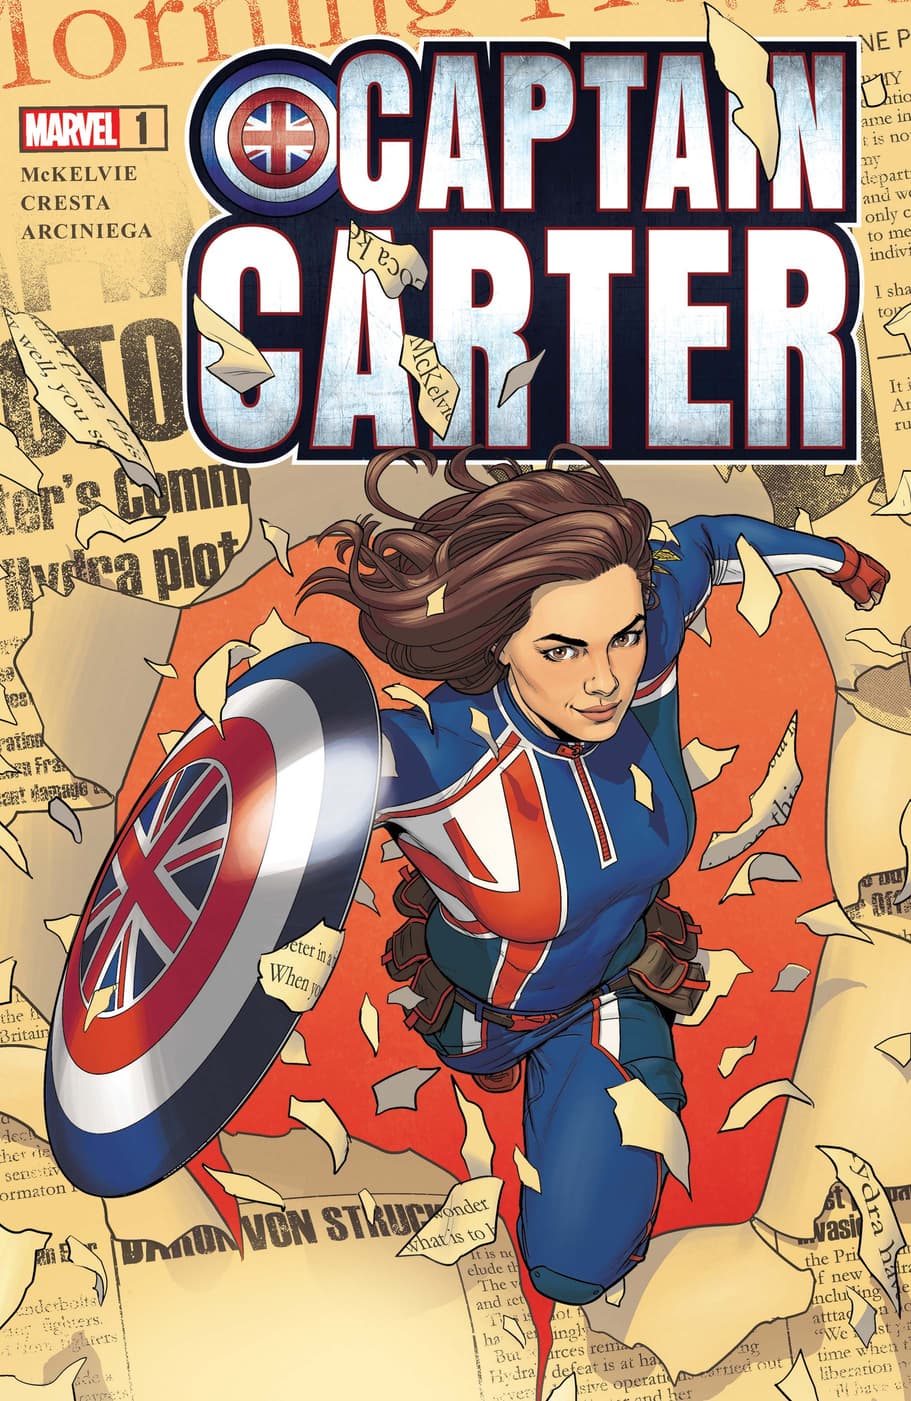 Captain Carter #1 main cover by Jamie McKelvie